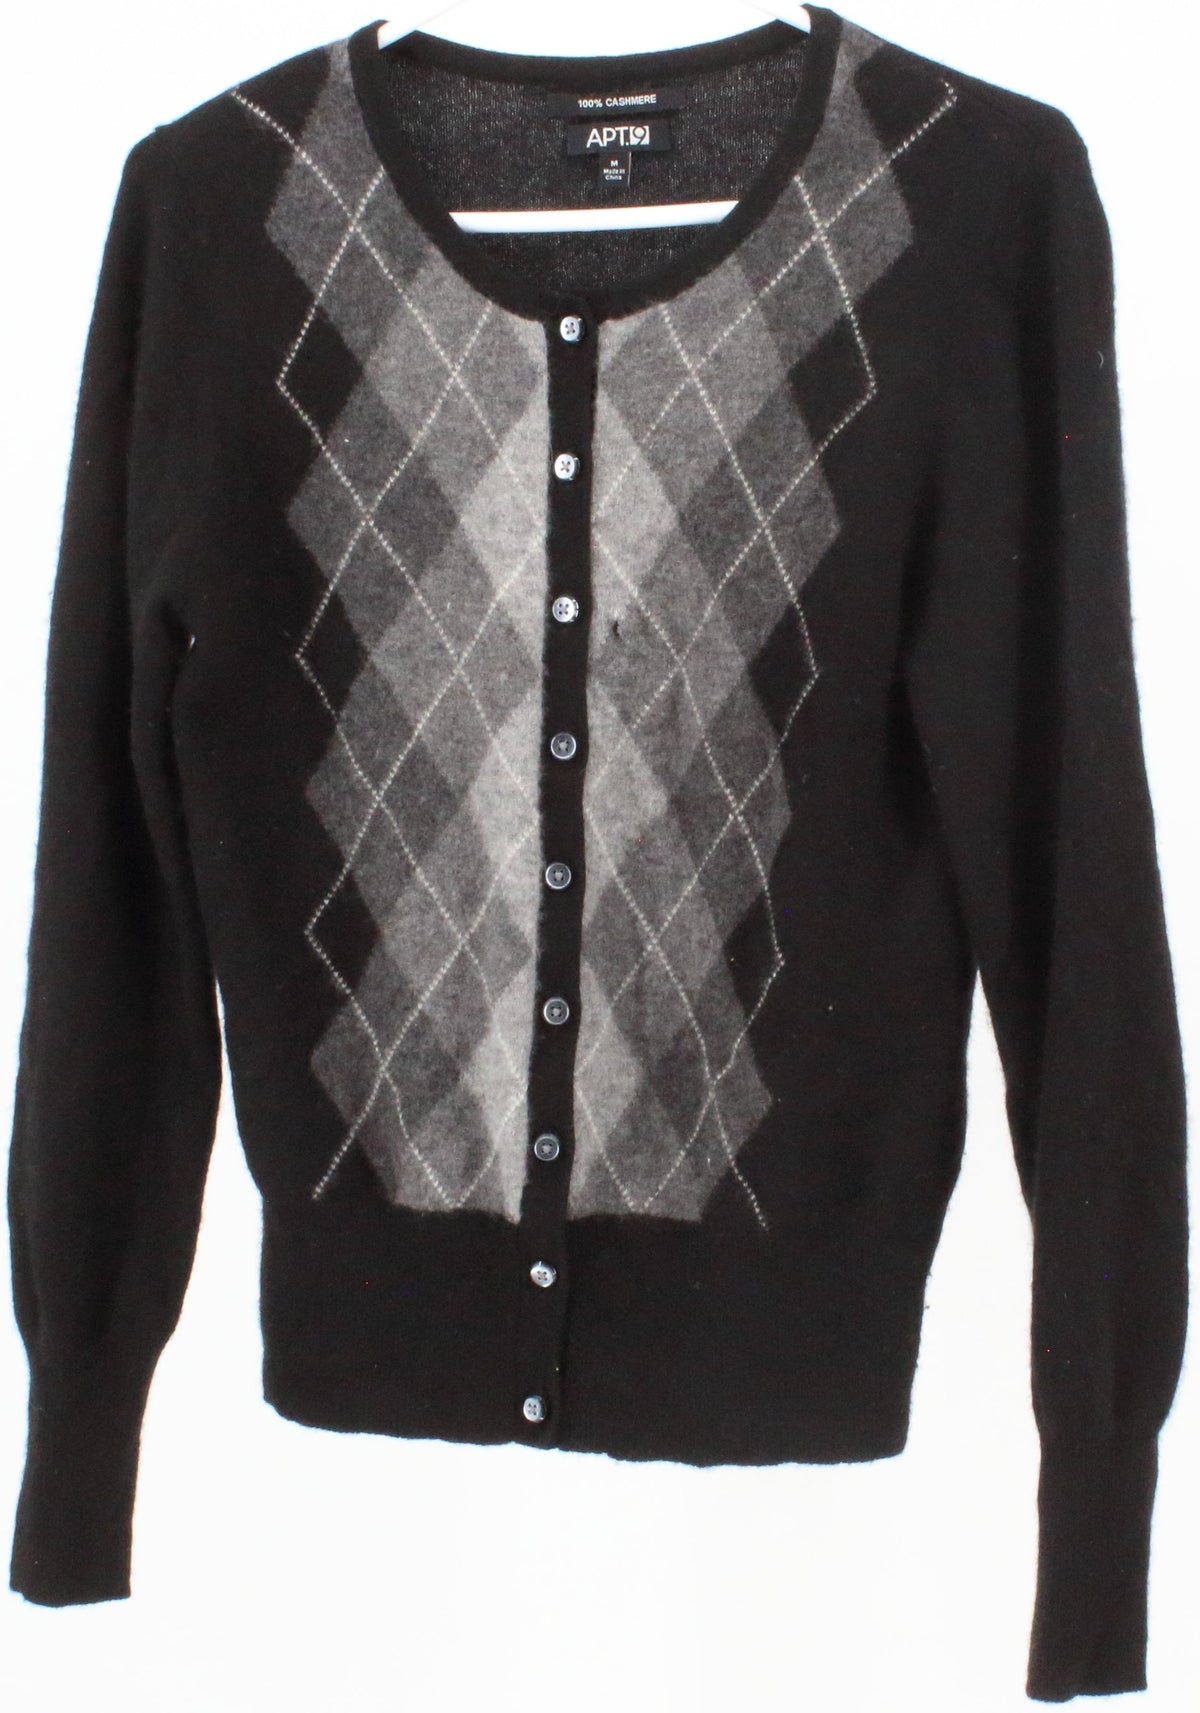 Apt.9 Black and Grey Cardigan Sweater